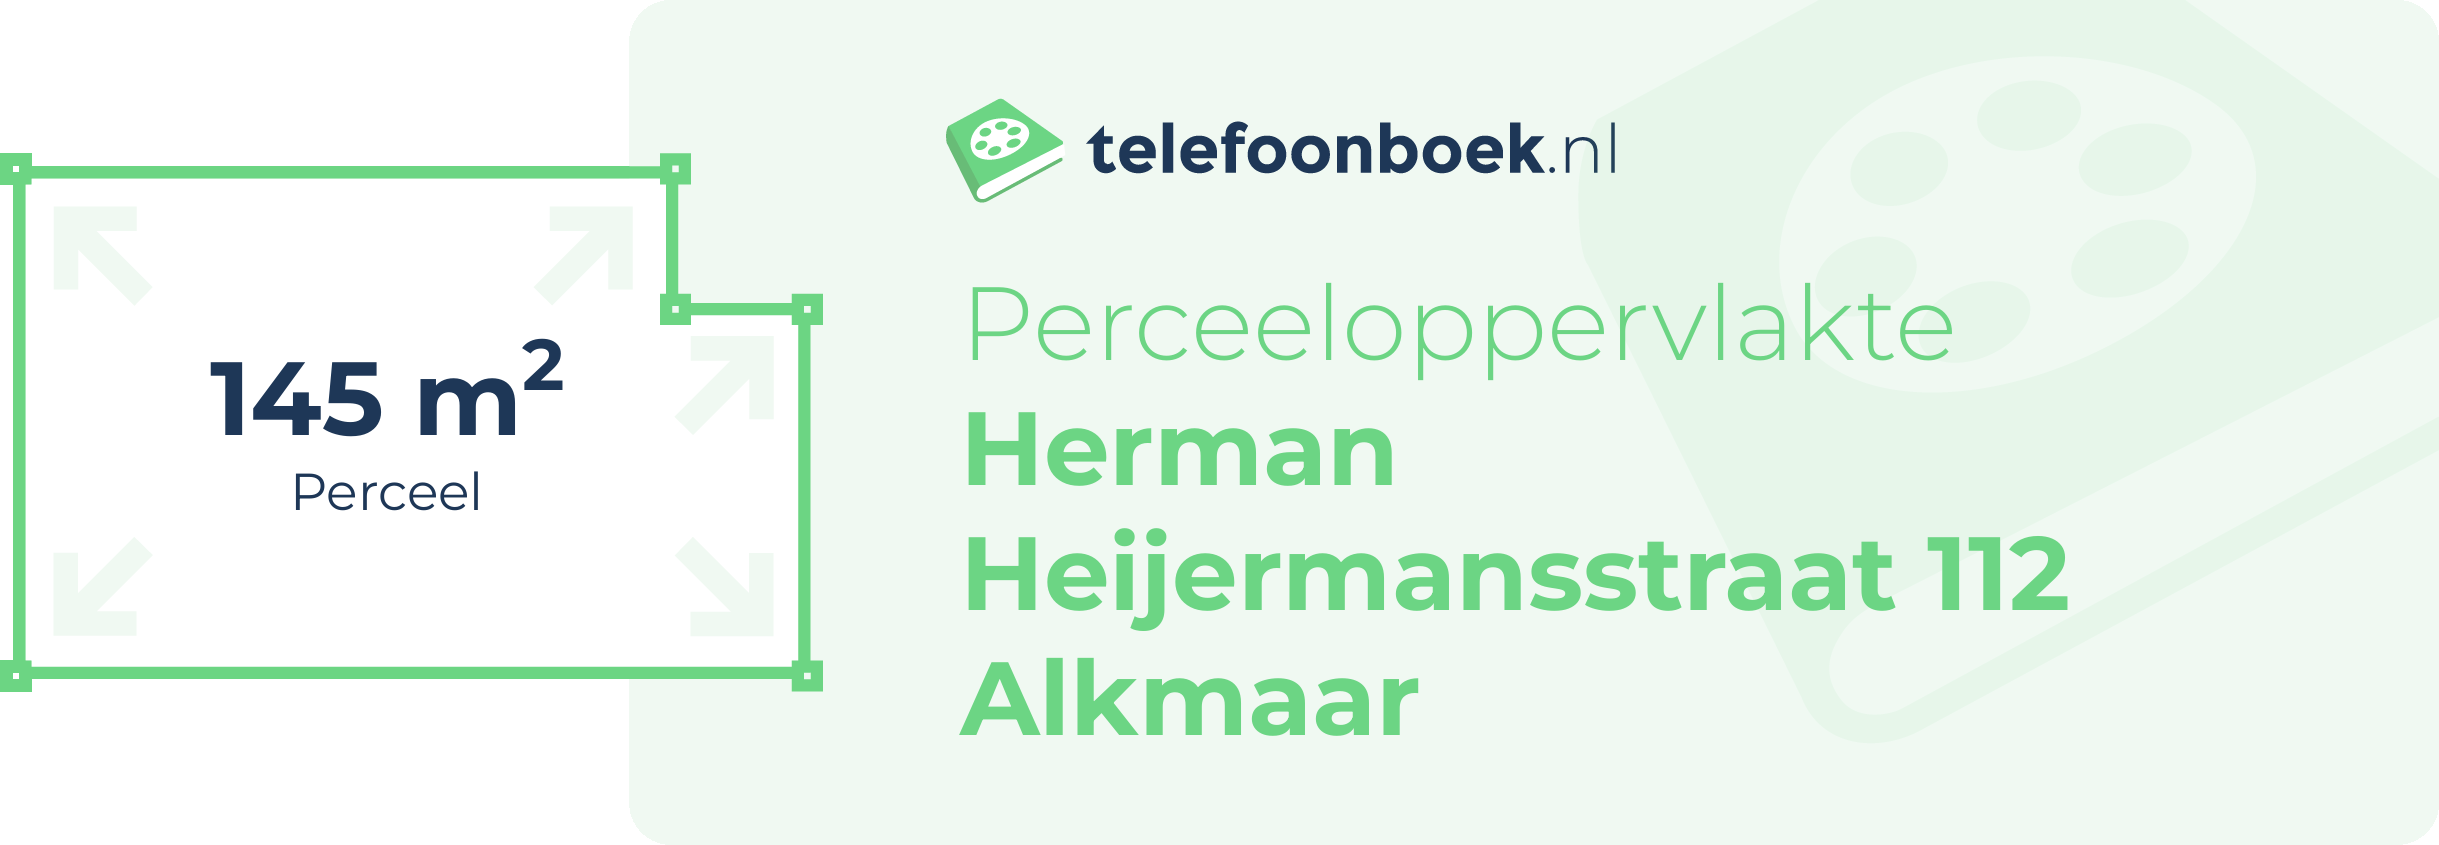 Perceeloppervlakte Herman Heijermansstraat 112 Alkmaar